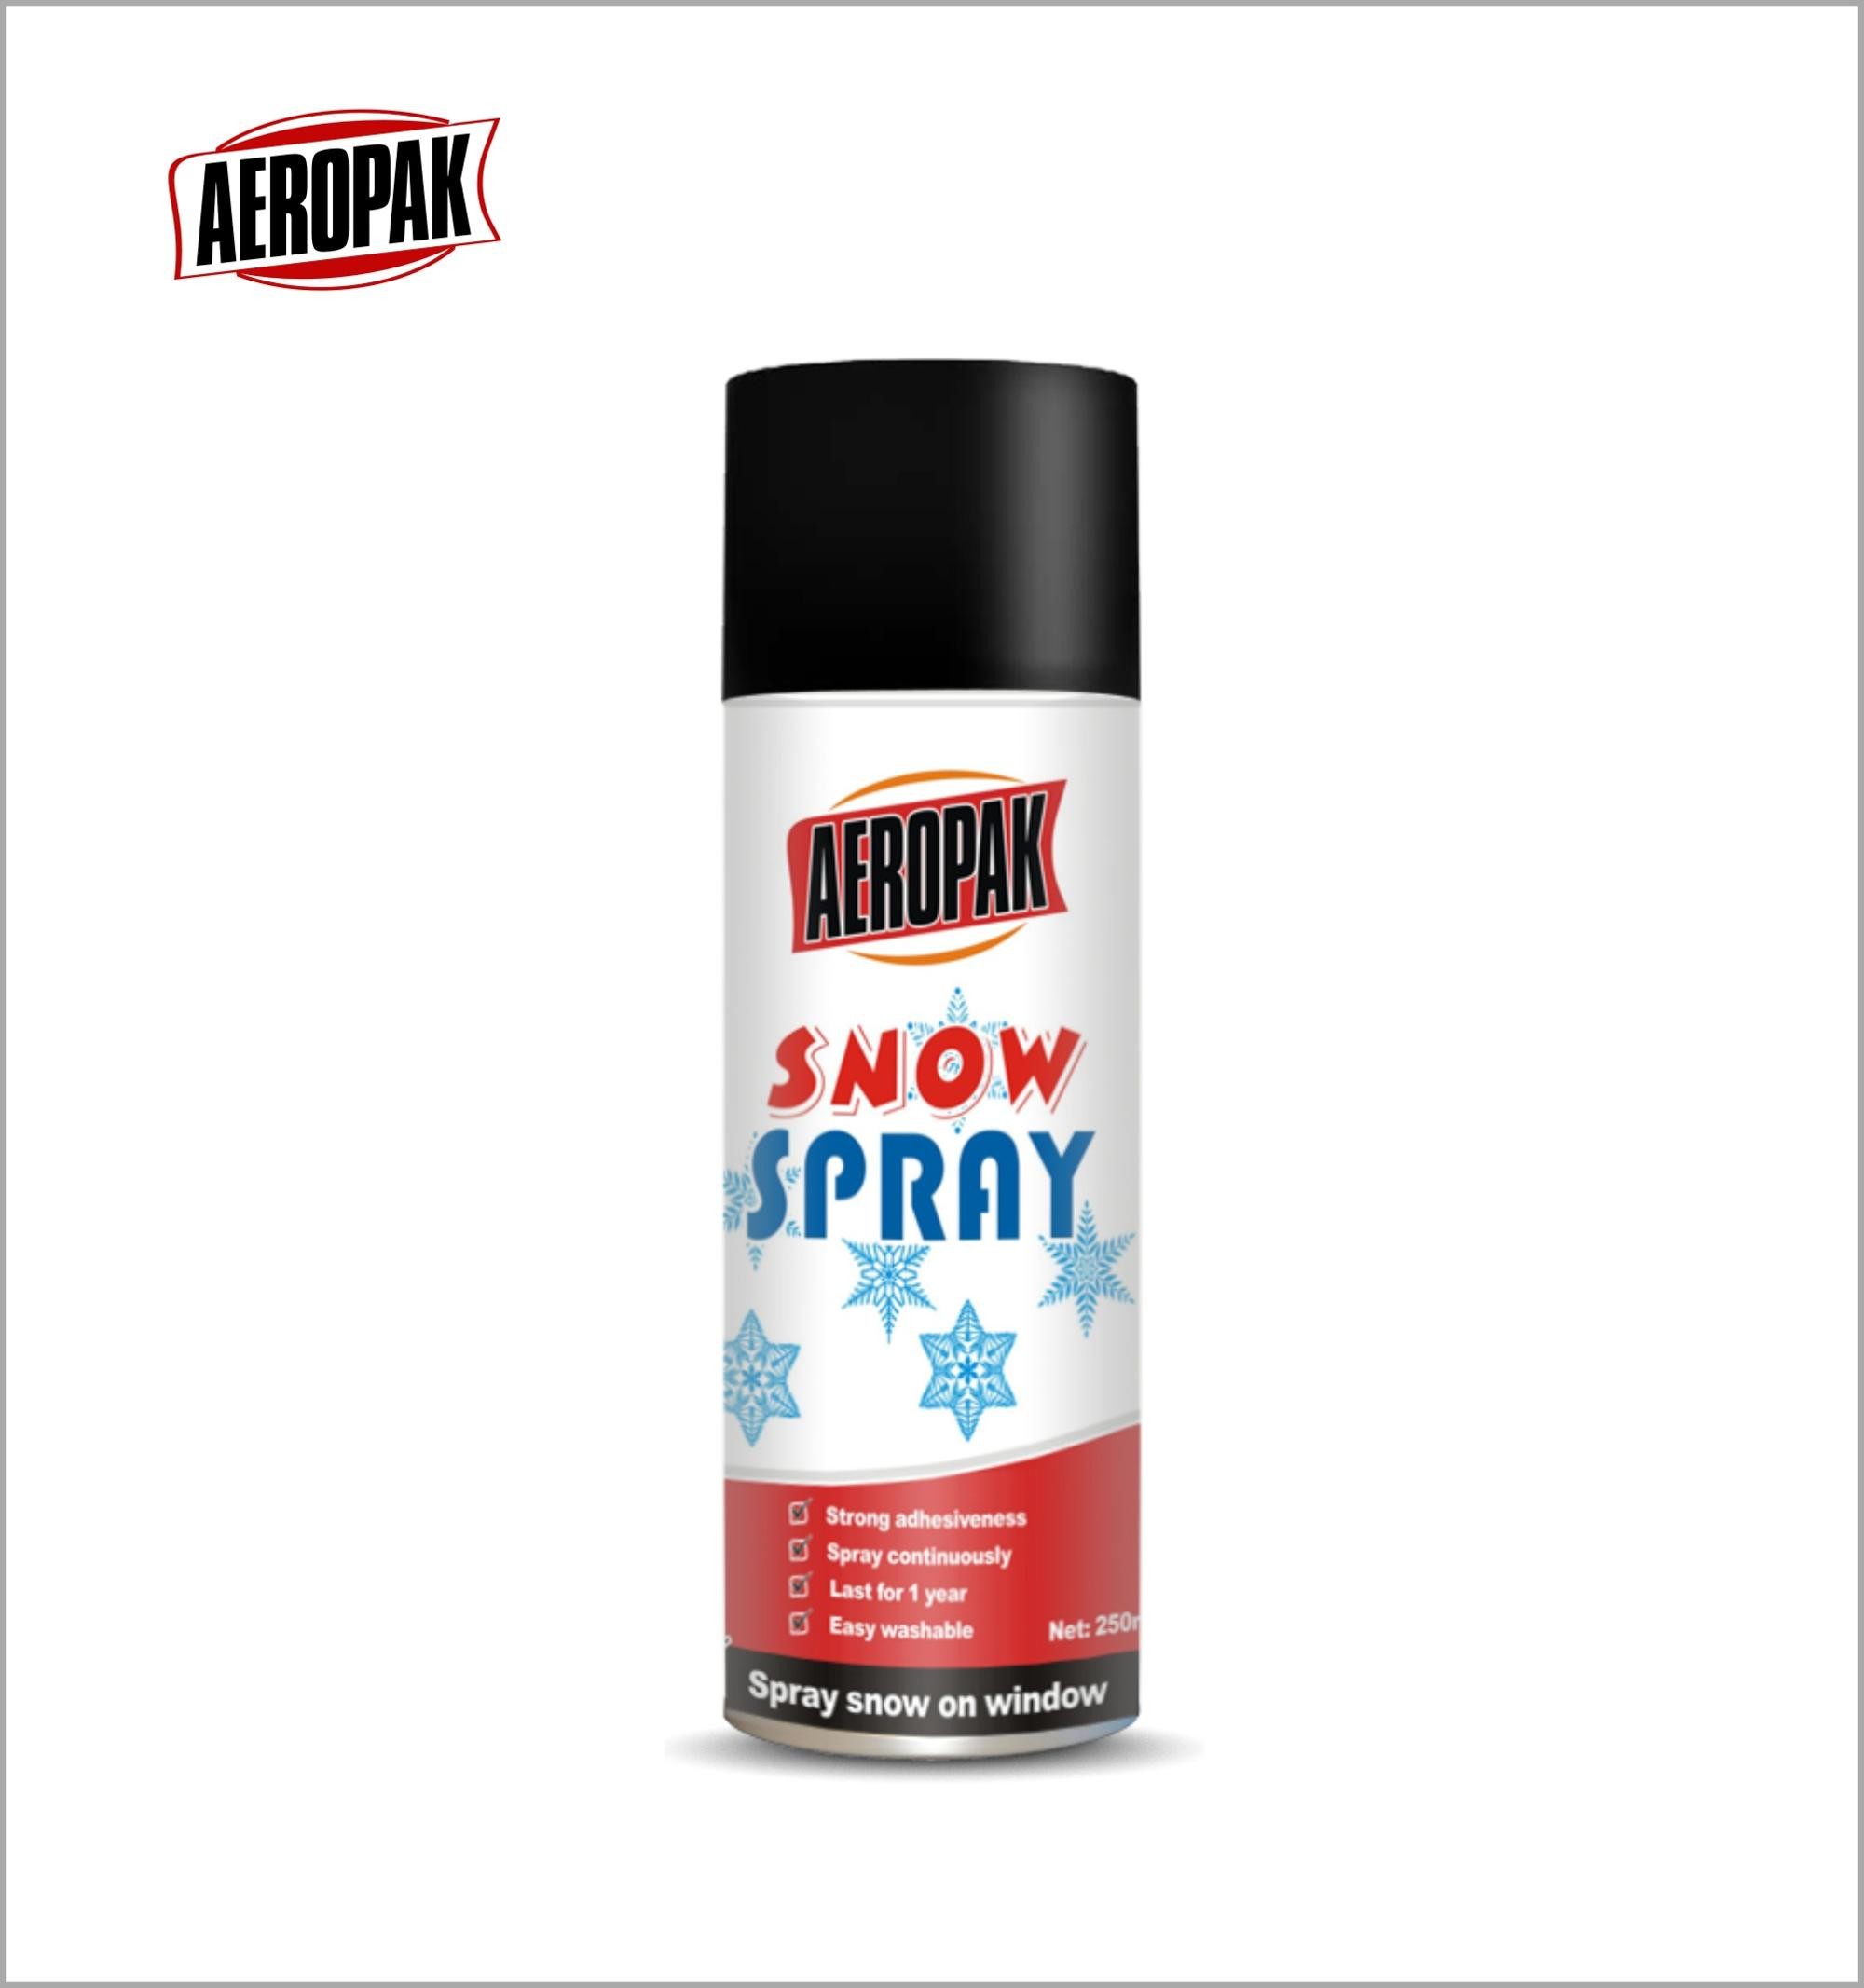  AEROPAK snow spray Manufactures